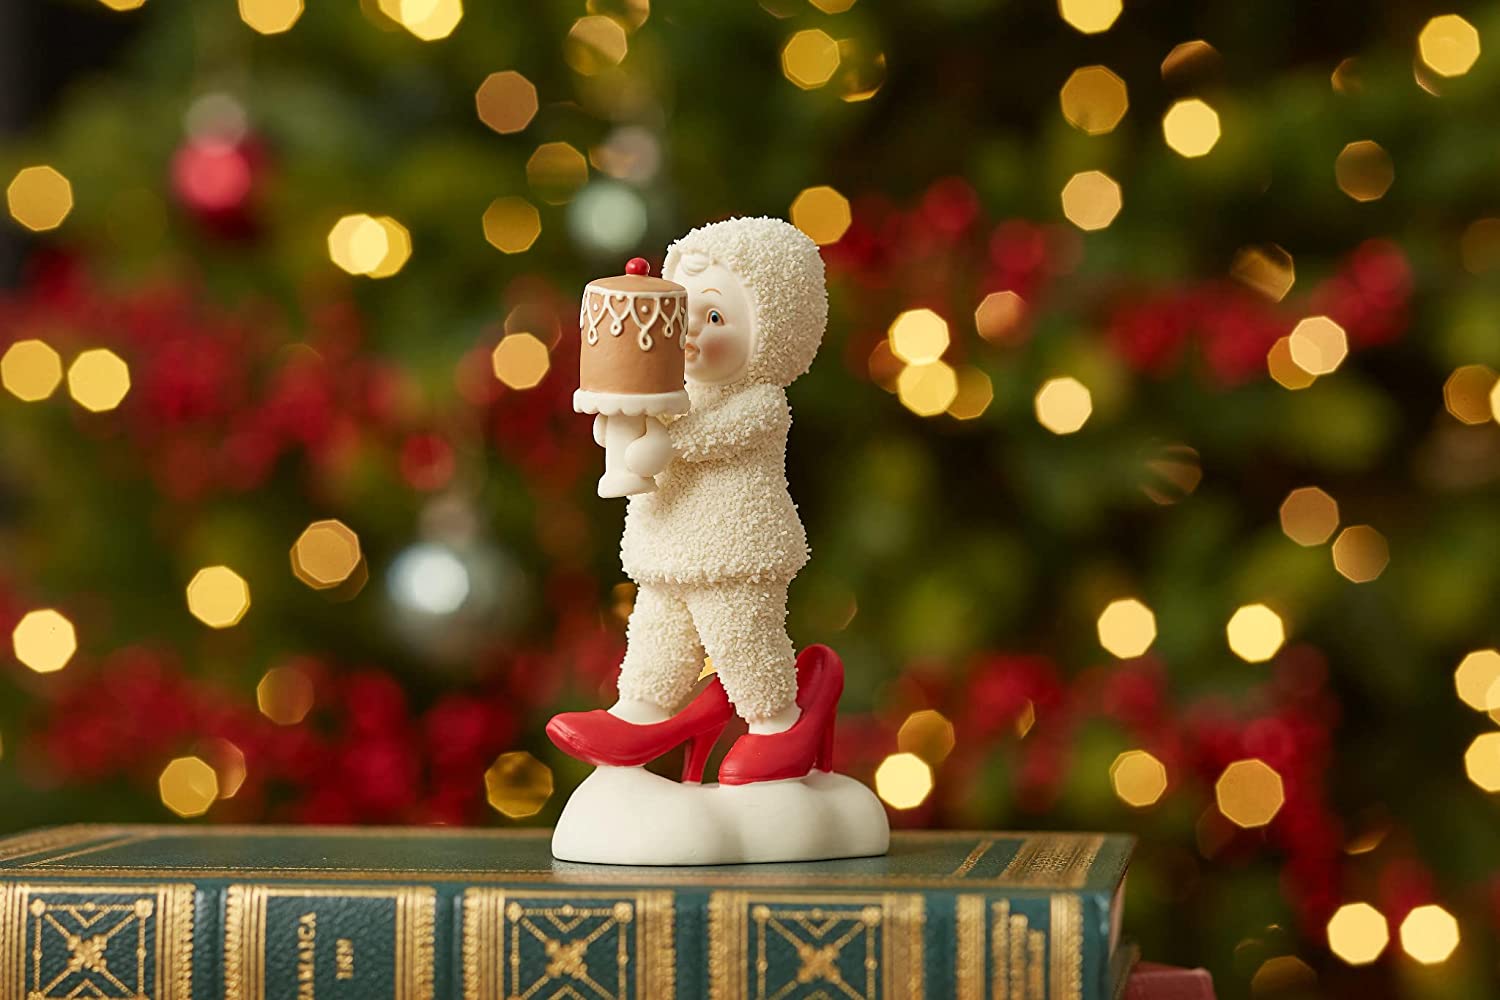 Department 56 Snowbabies Christmas Memories a Cherry On Top Figurine